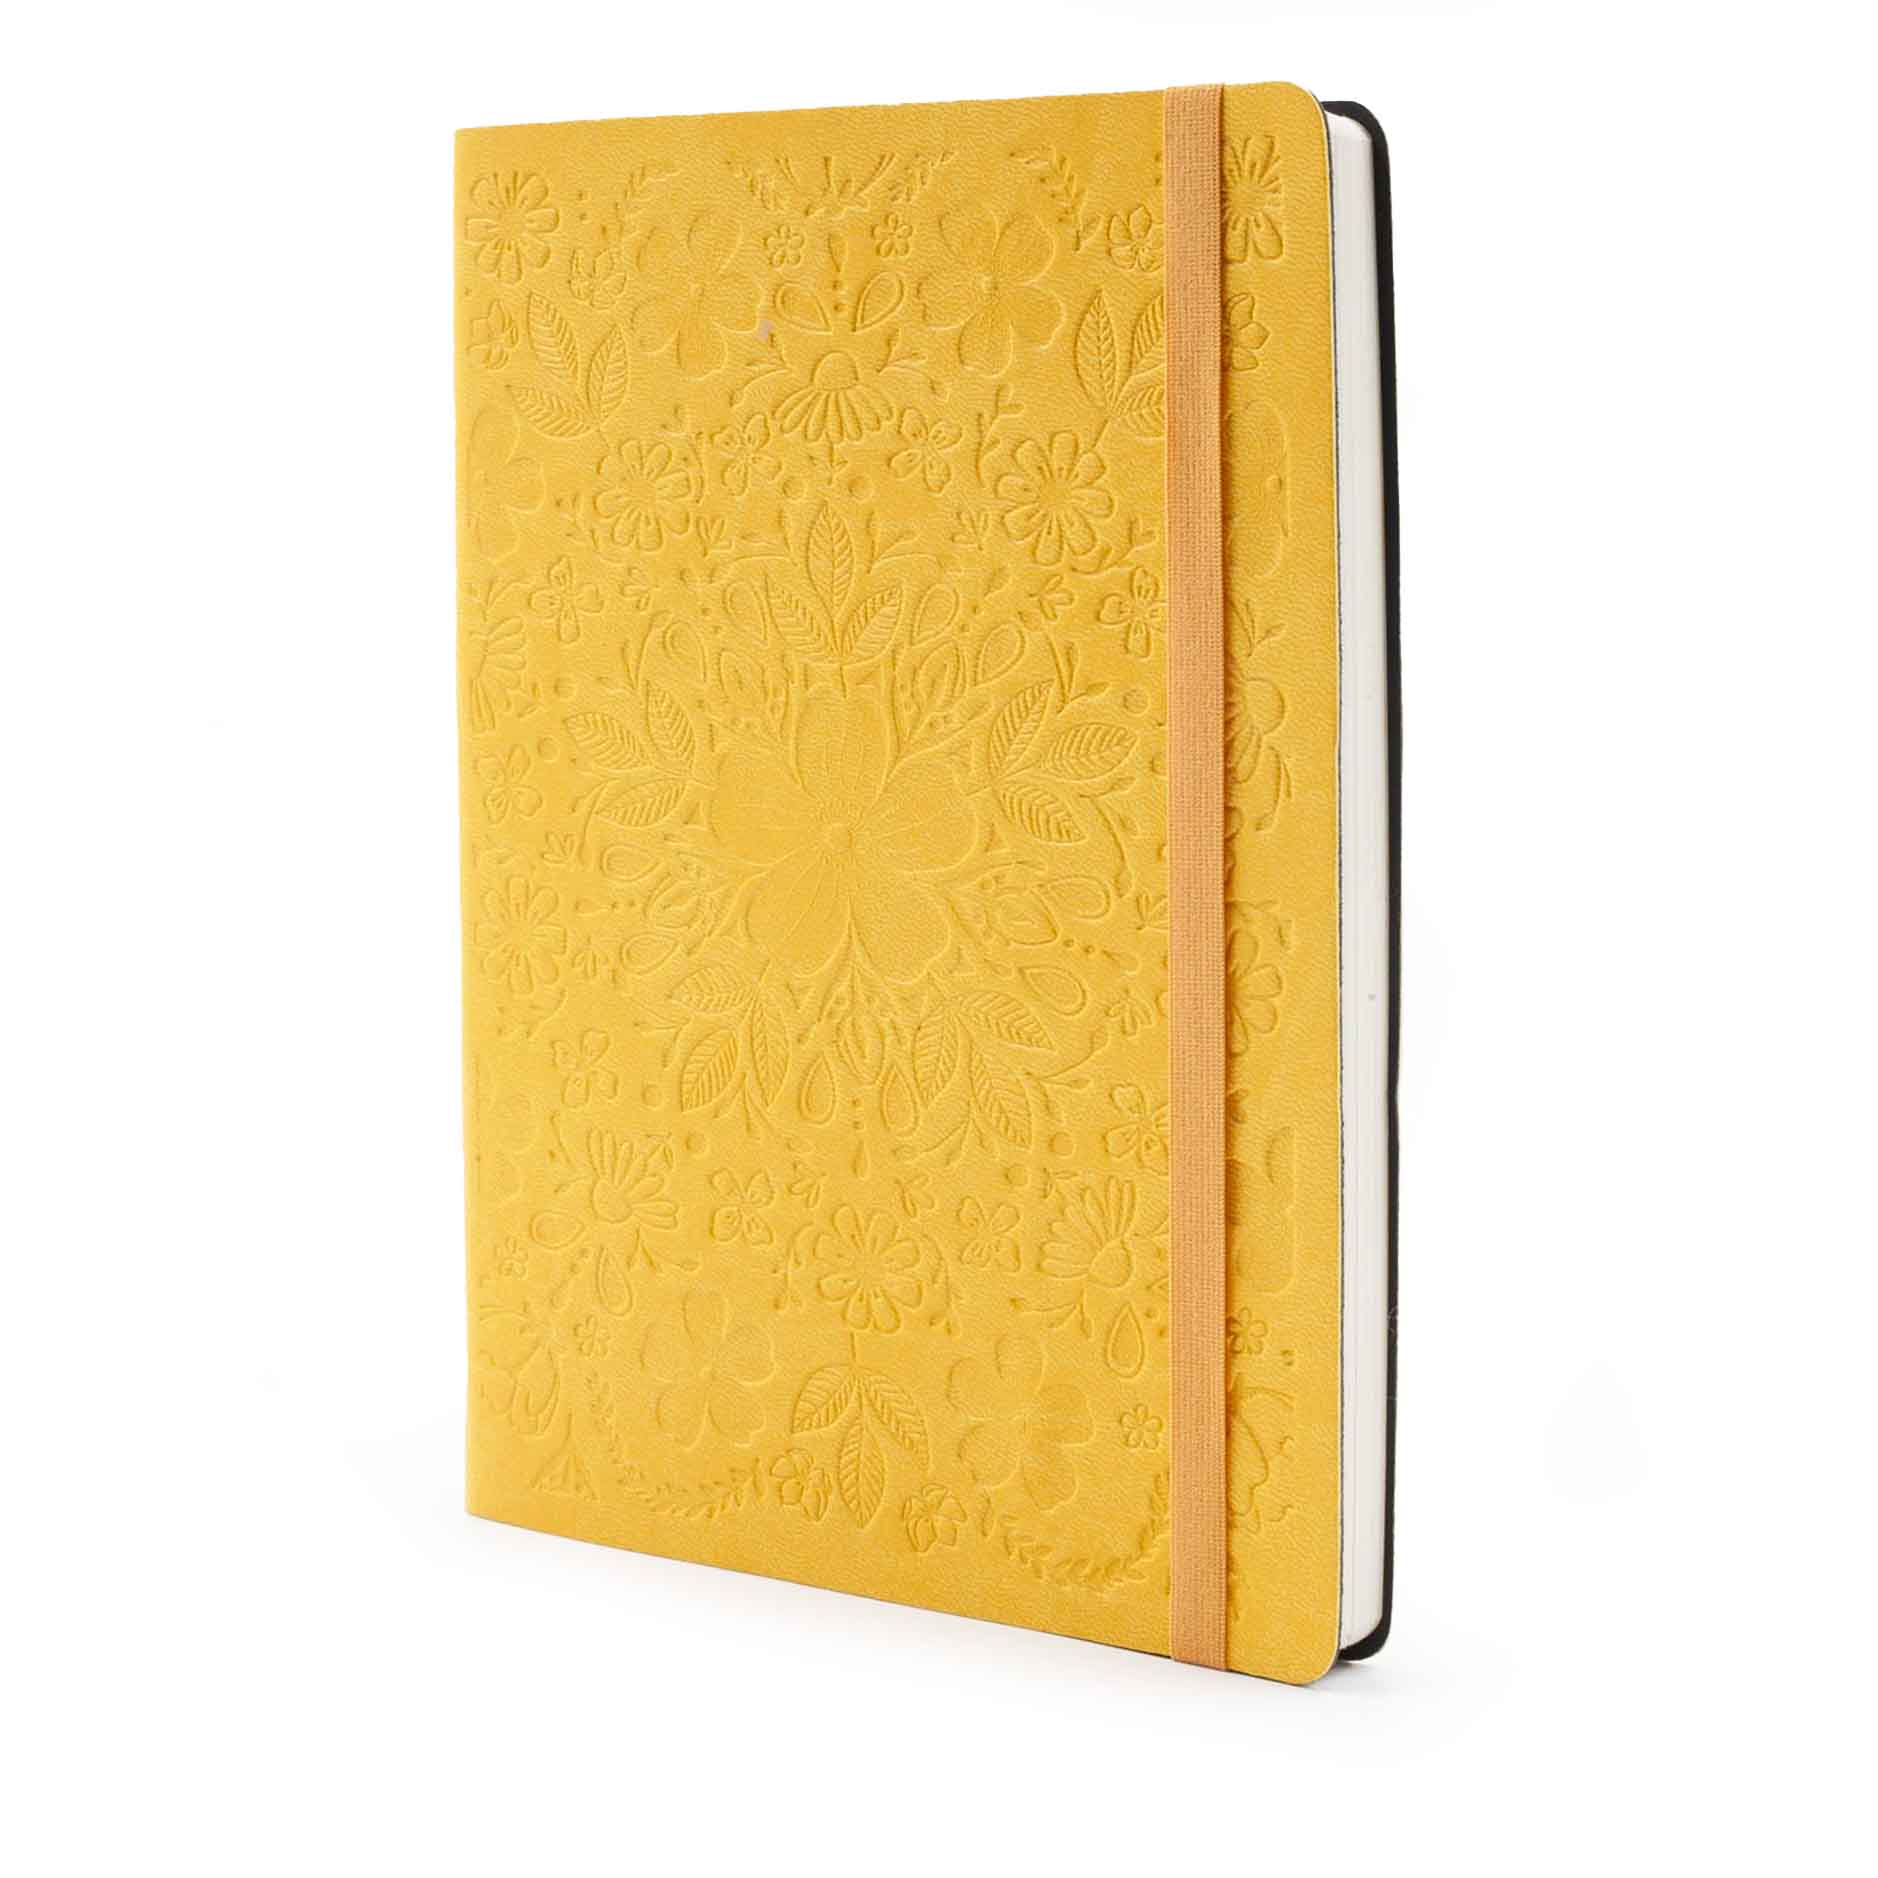 Image shows a yellow Flexi Premium journal